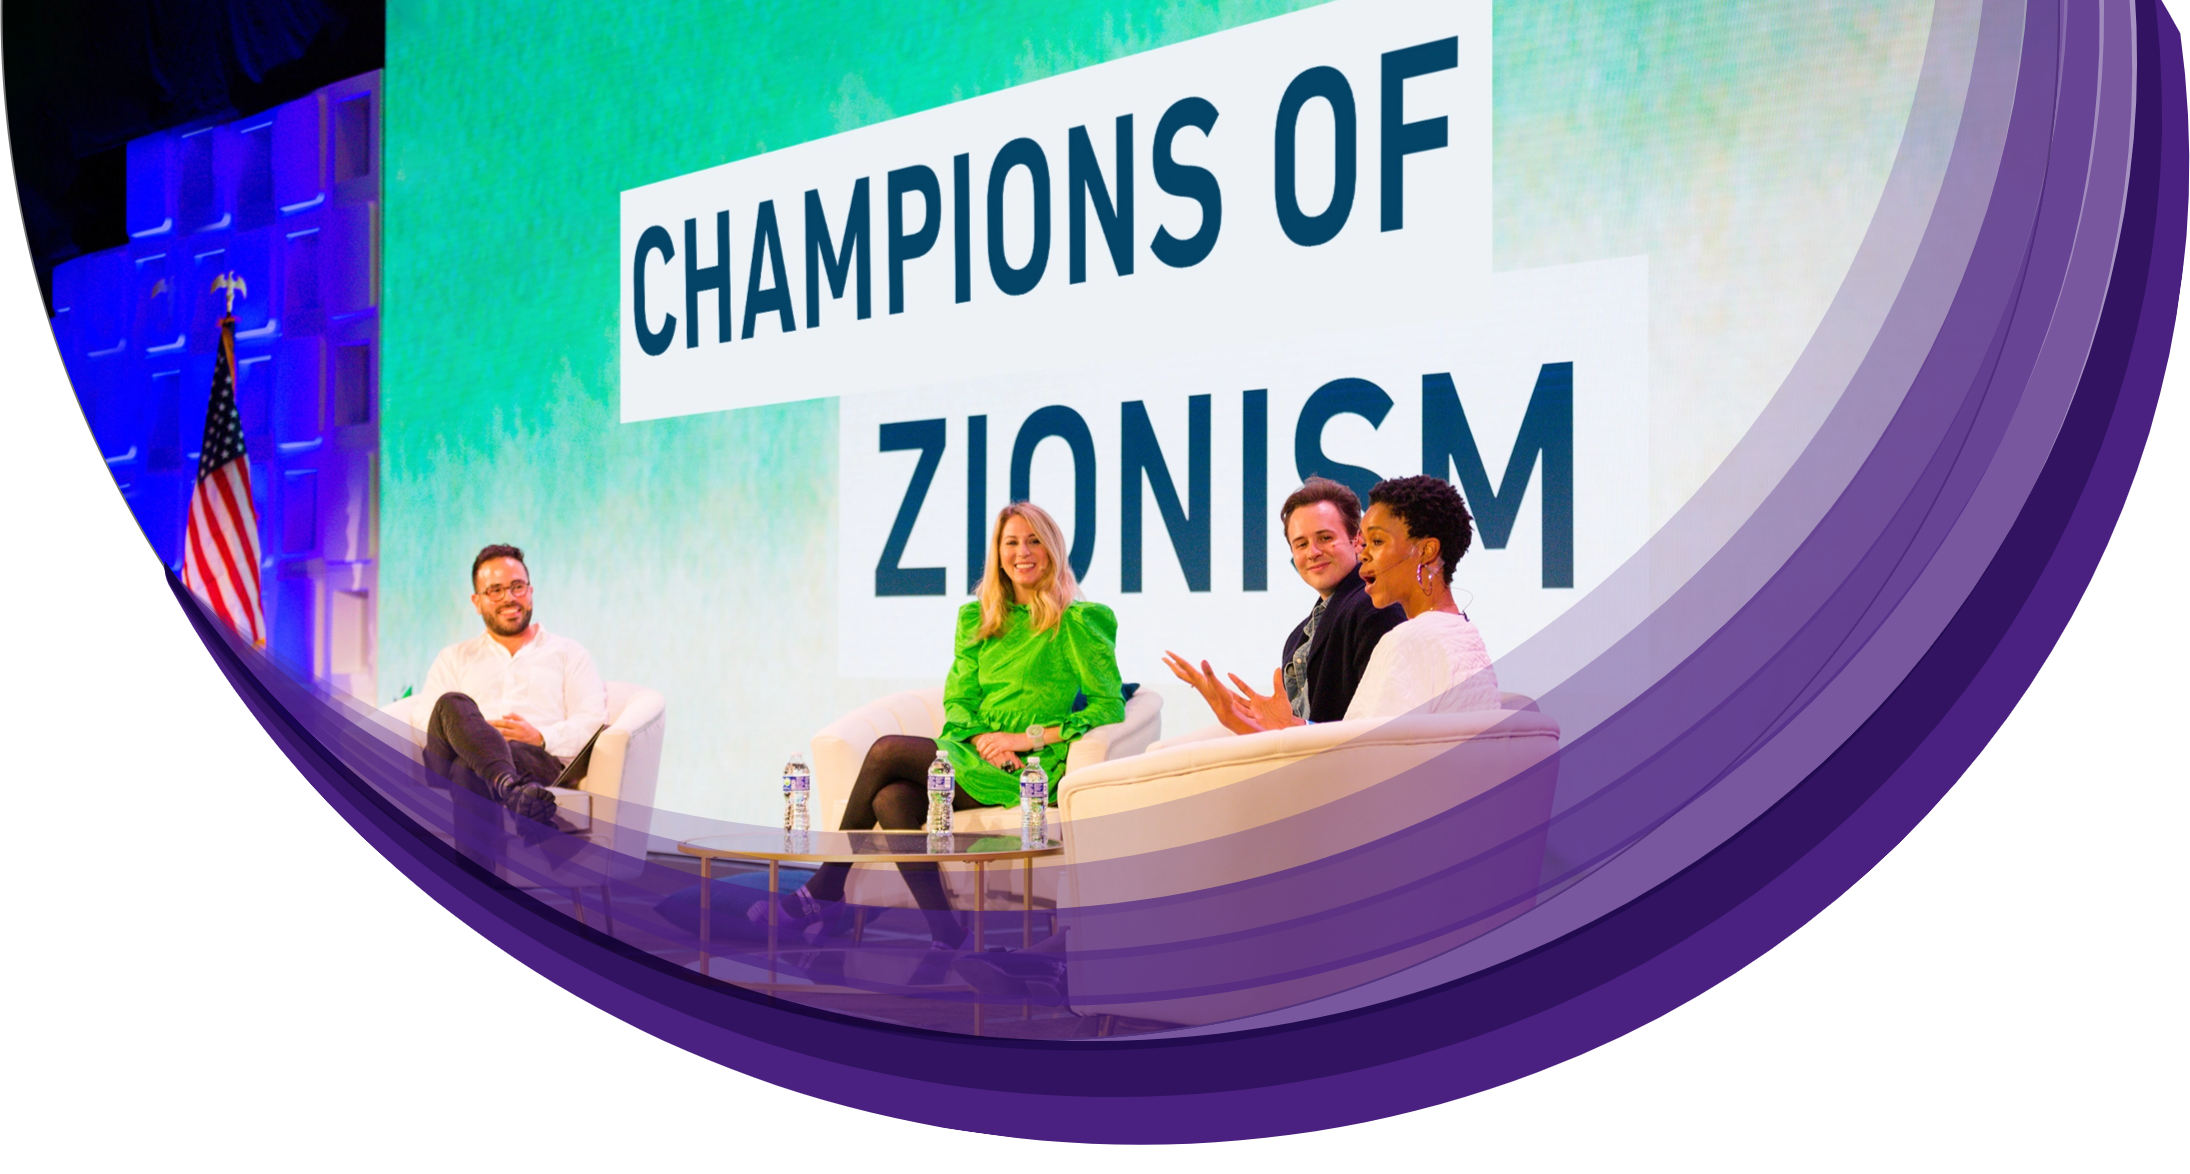 Champions of Zionism